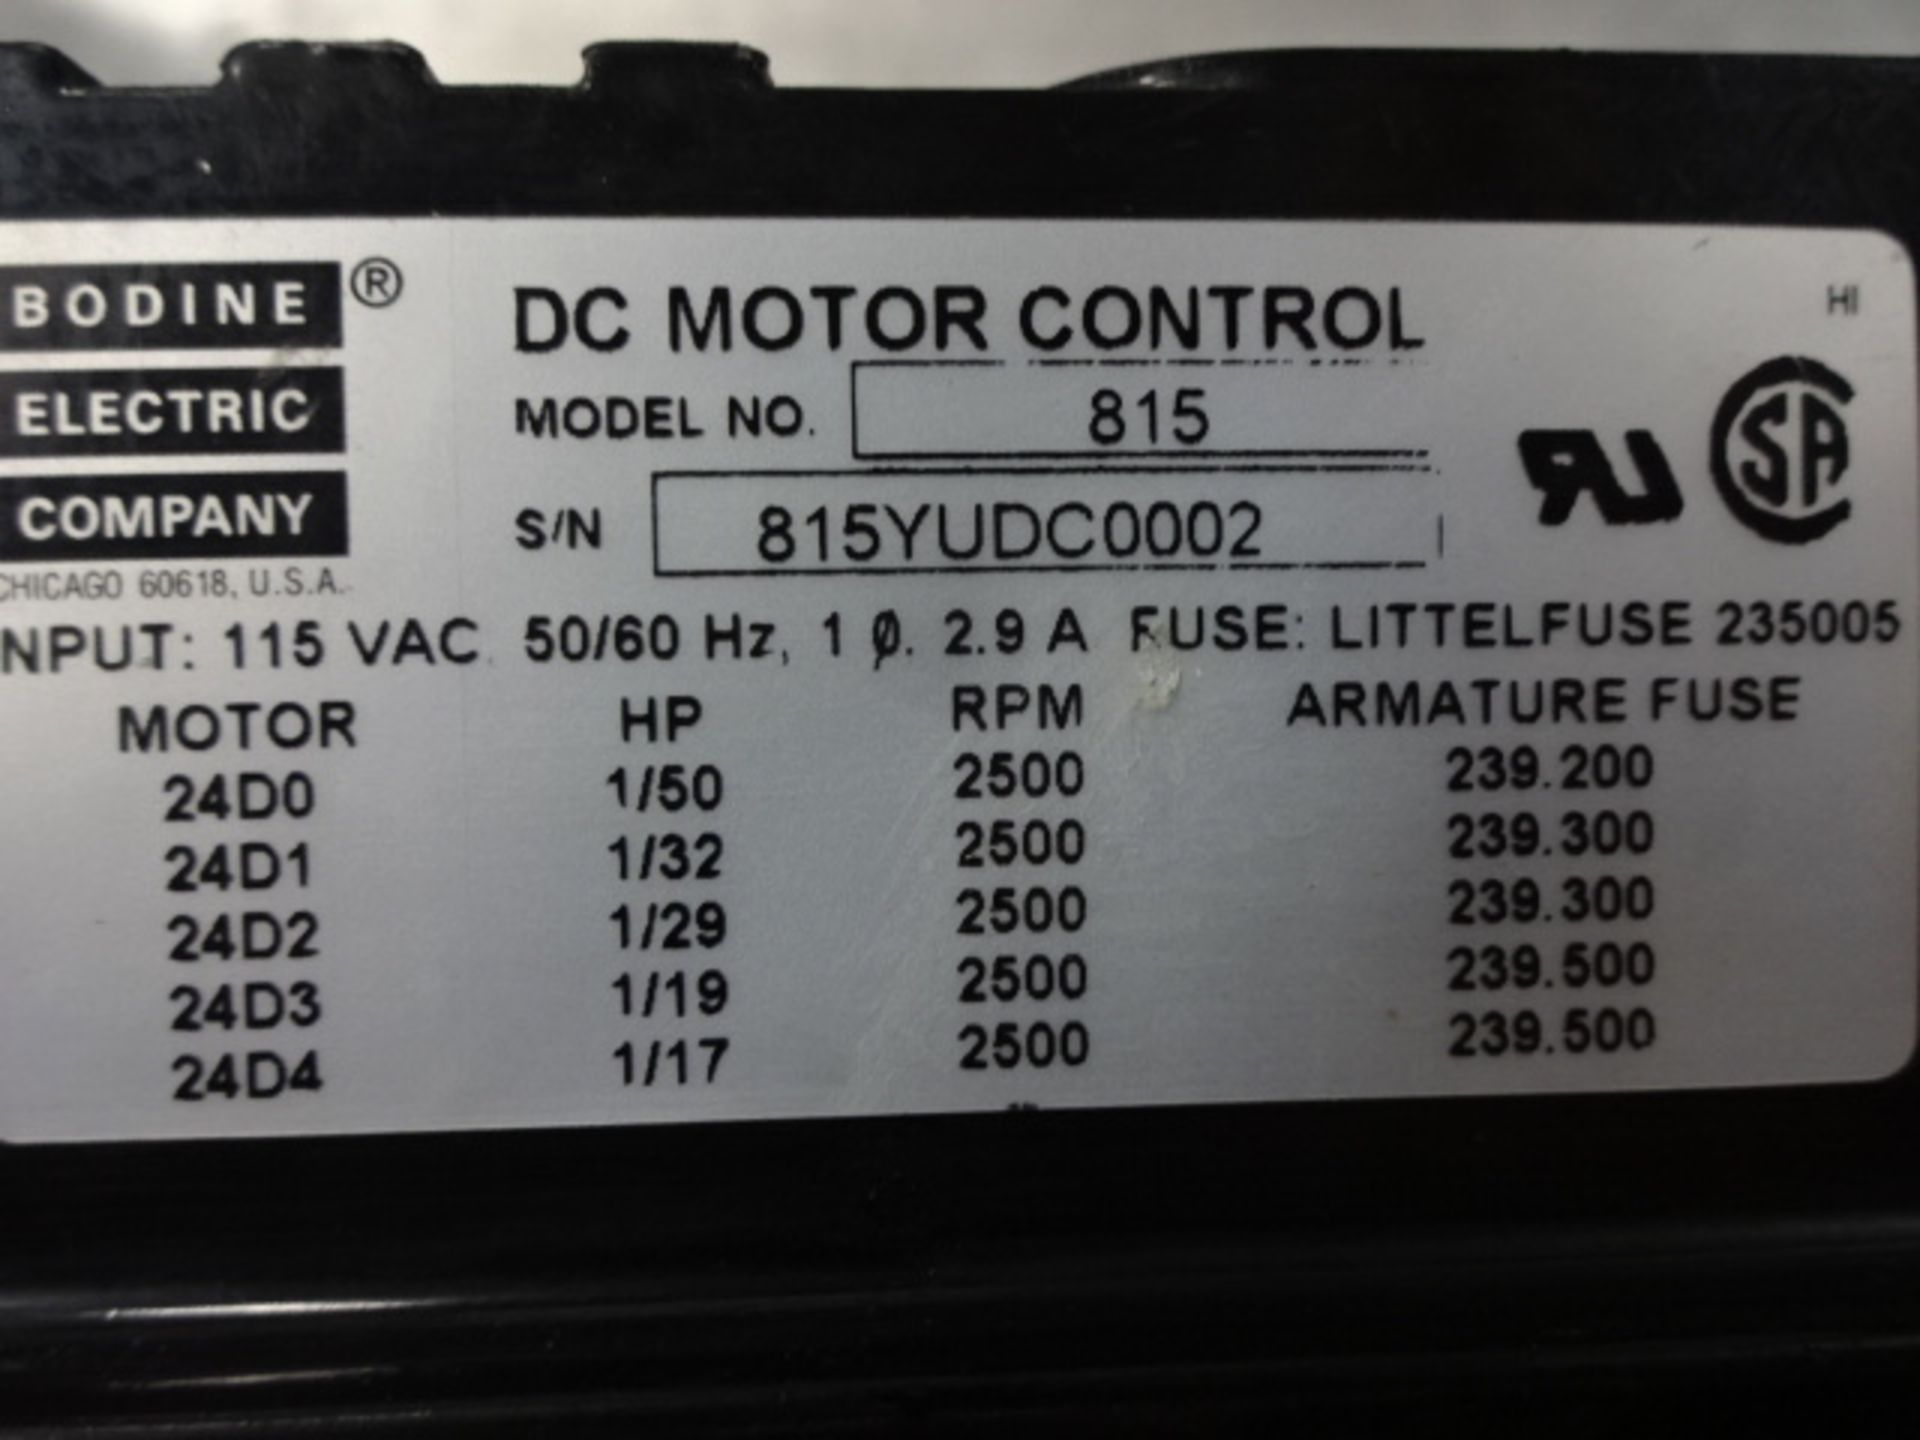 Bodine Electric Company DC Motor Control Adjustable Speed/Torque Control - Image 3 of 4